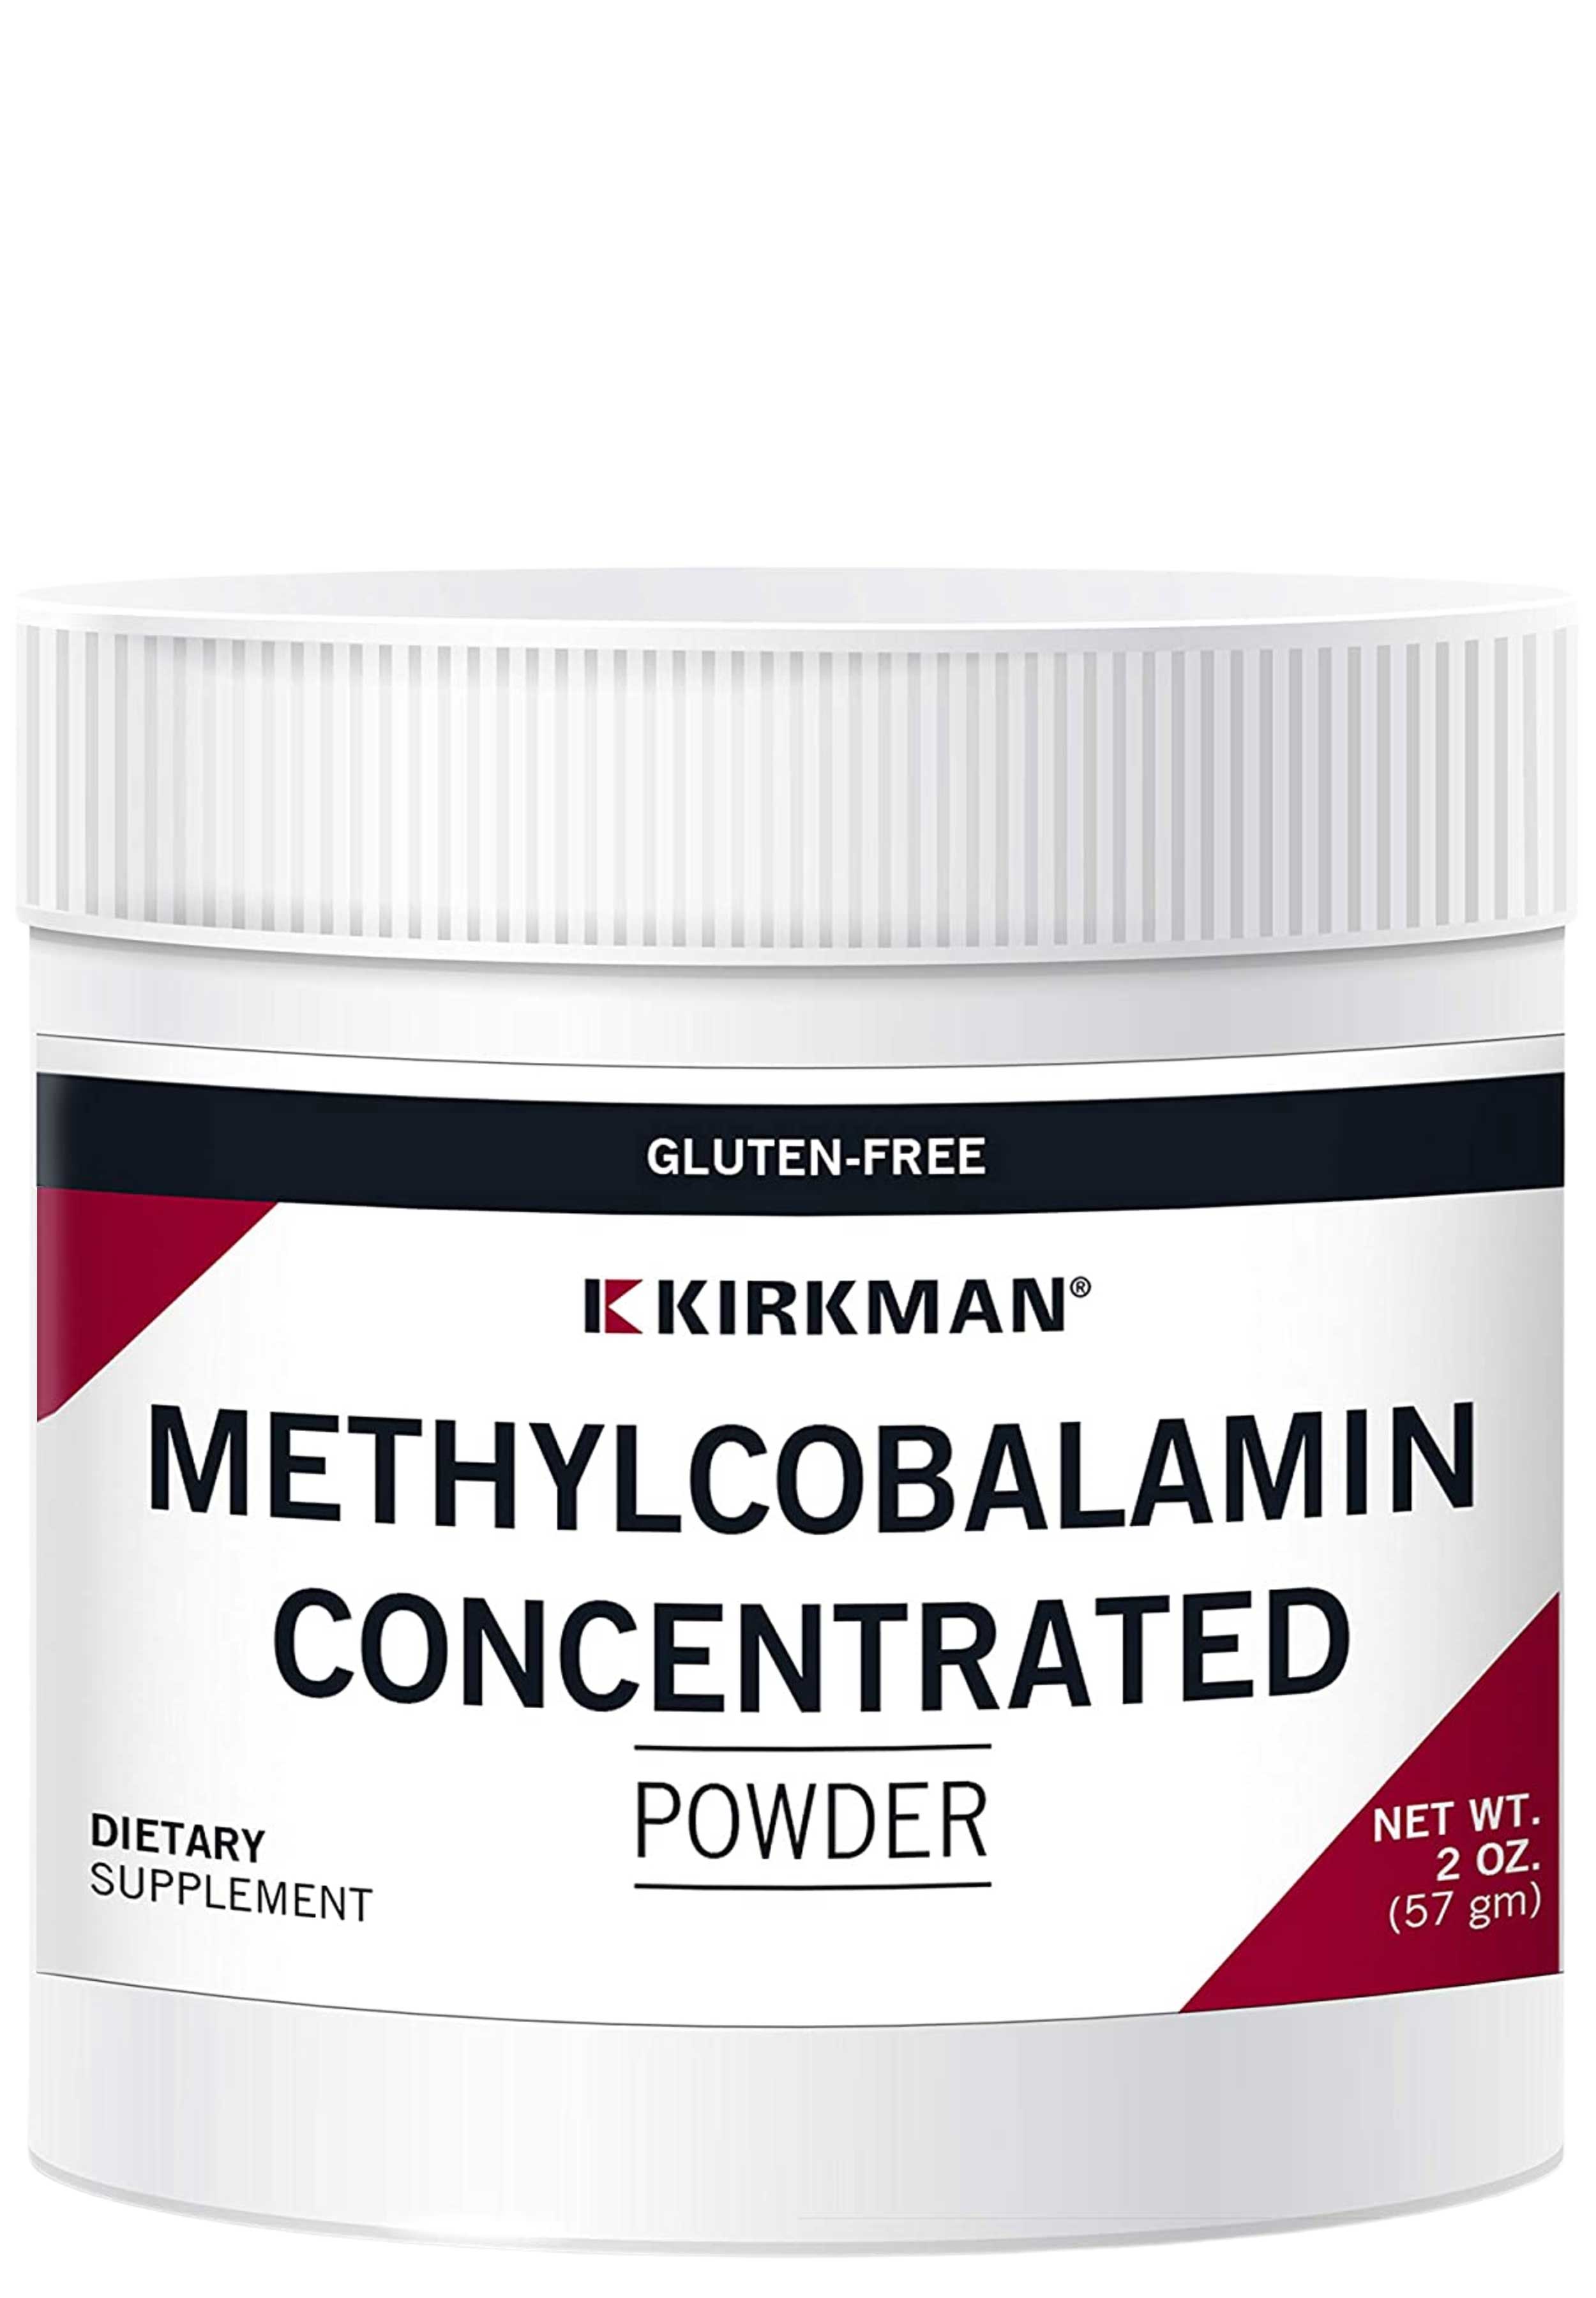 Kirkman Methylcobalamin Concentrated Powder